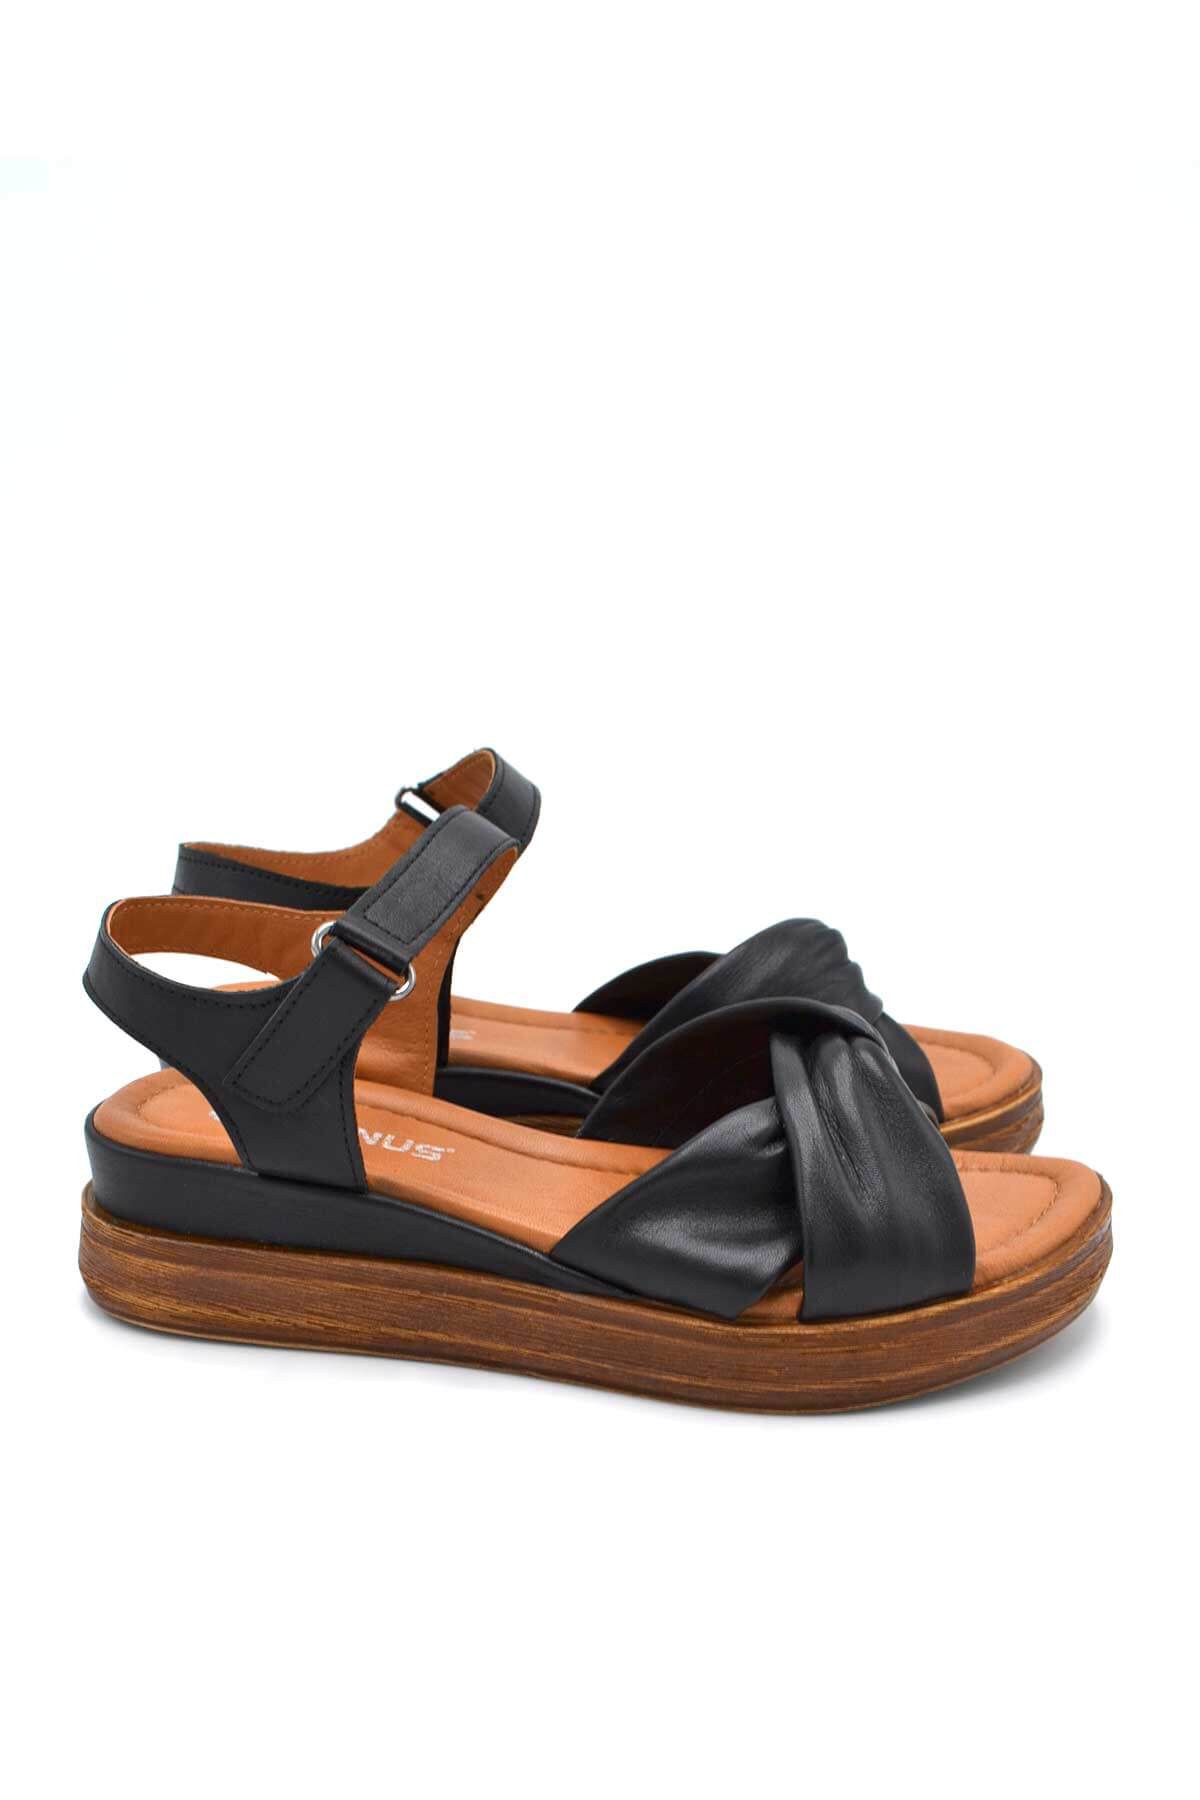 Kadın Comfort Deri Sandalet Siyah 2216403Y - Thumbnail